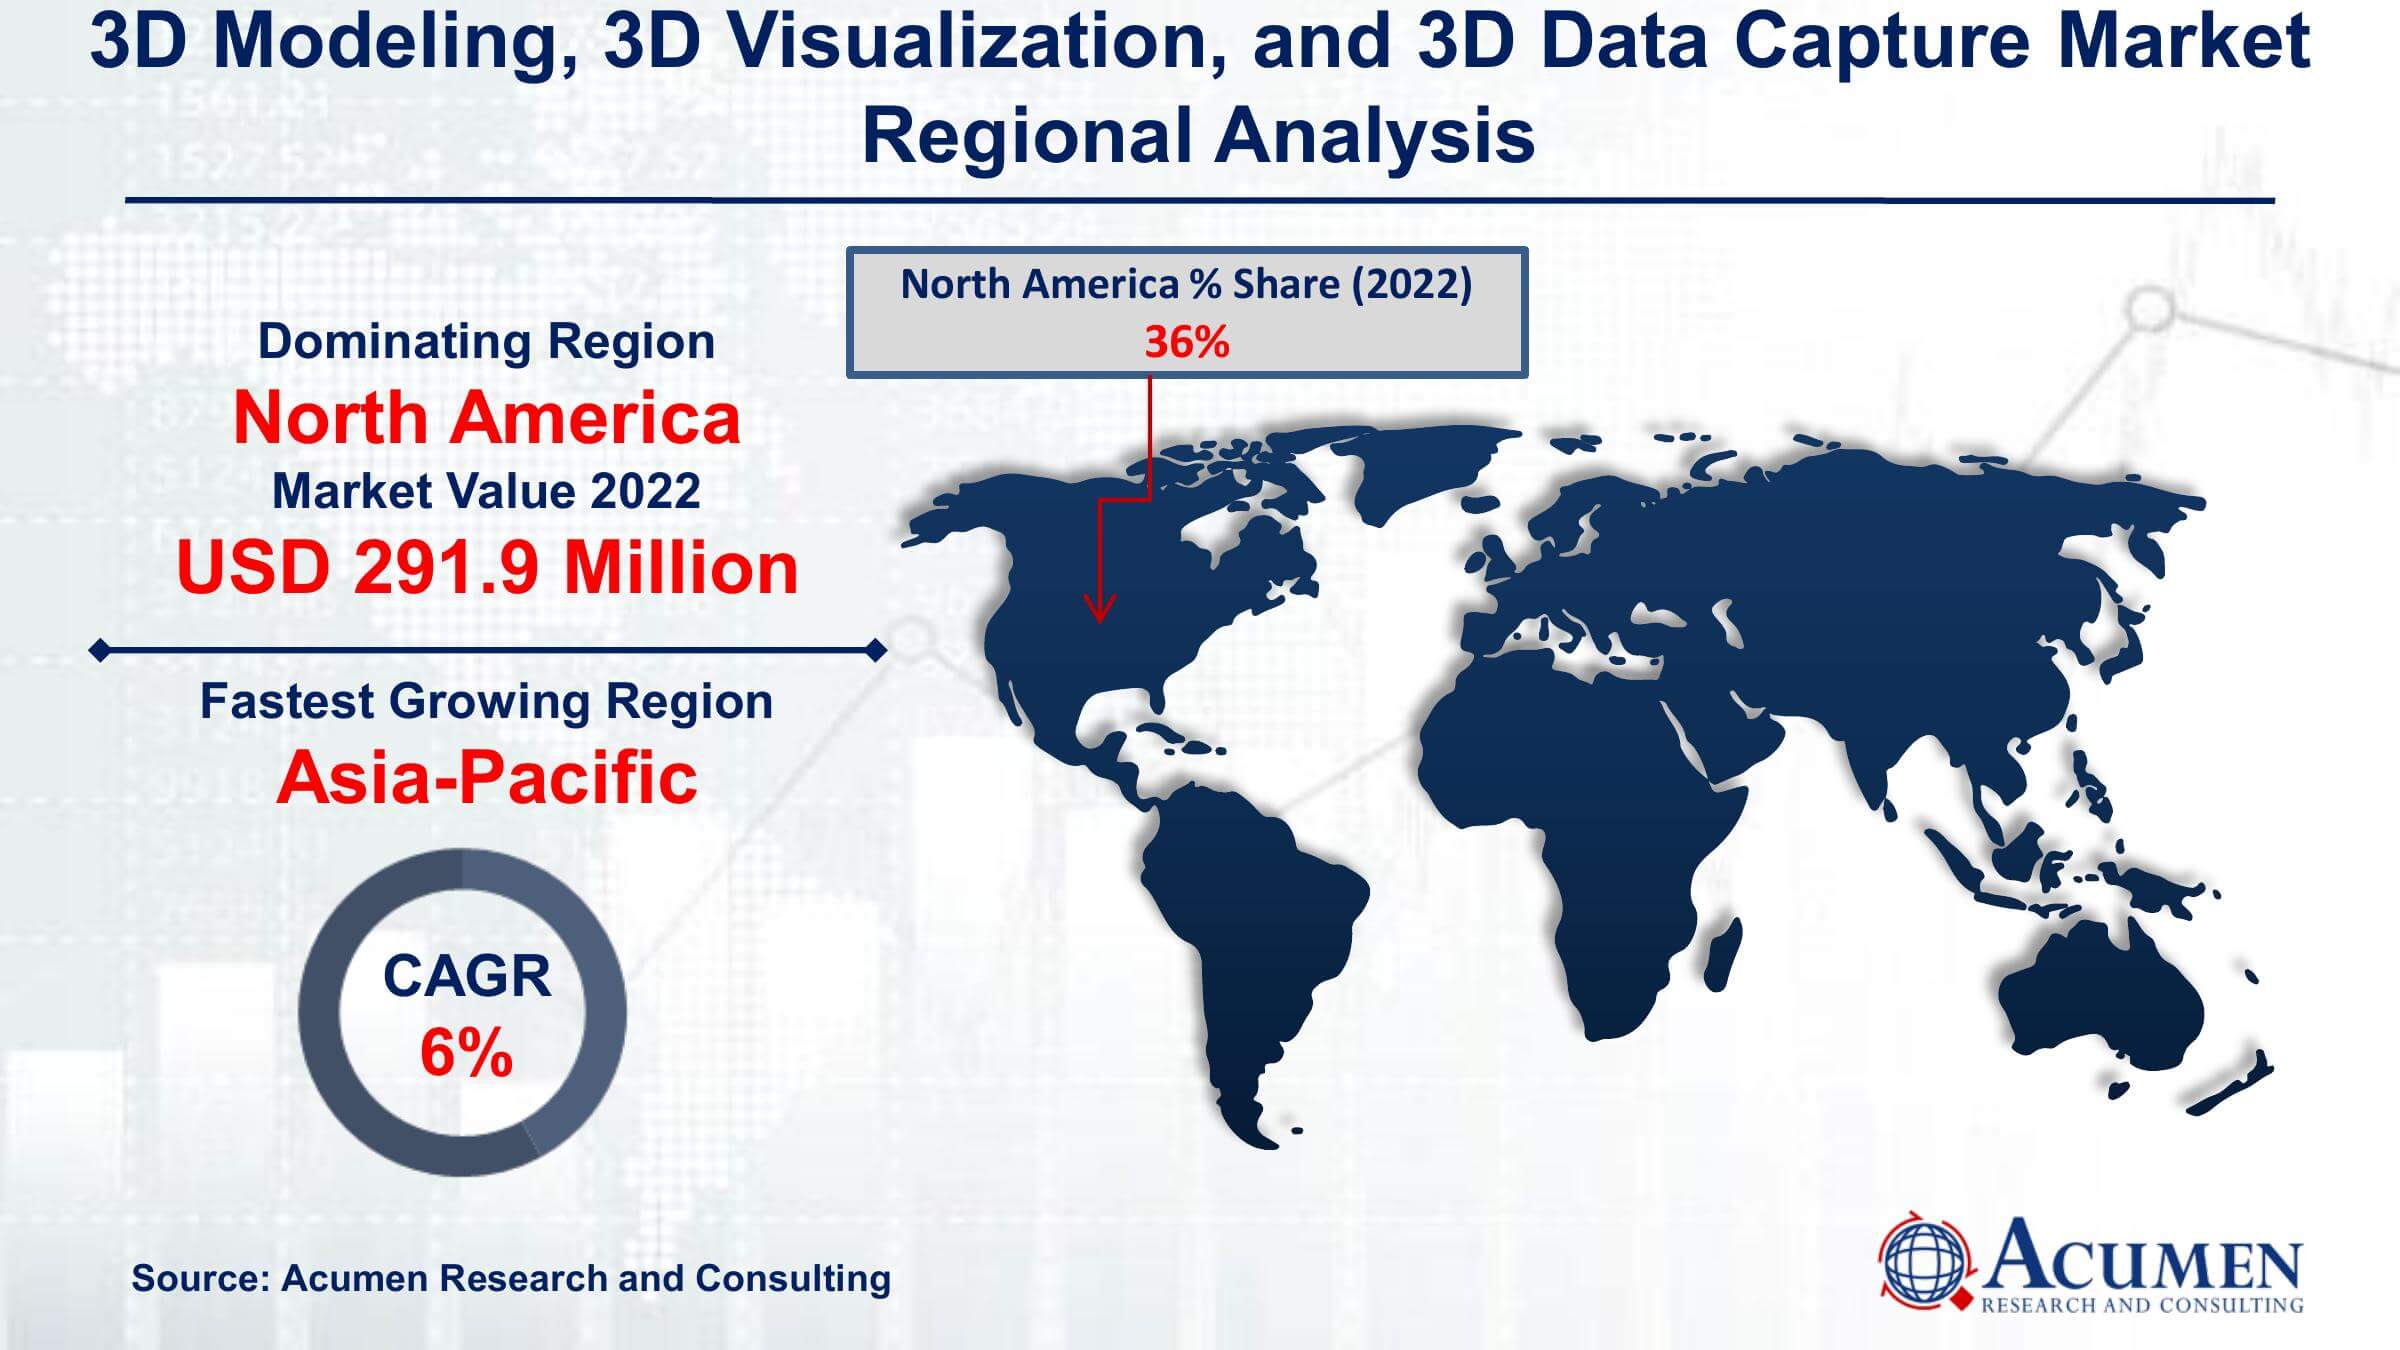 3D Modeling, 3D Visualization, and 3D Data Capture Market Drivers